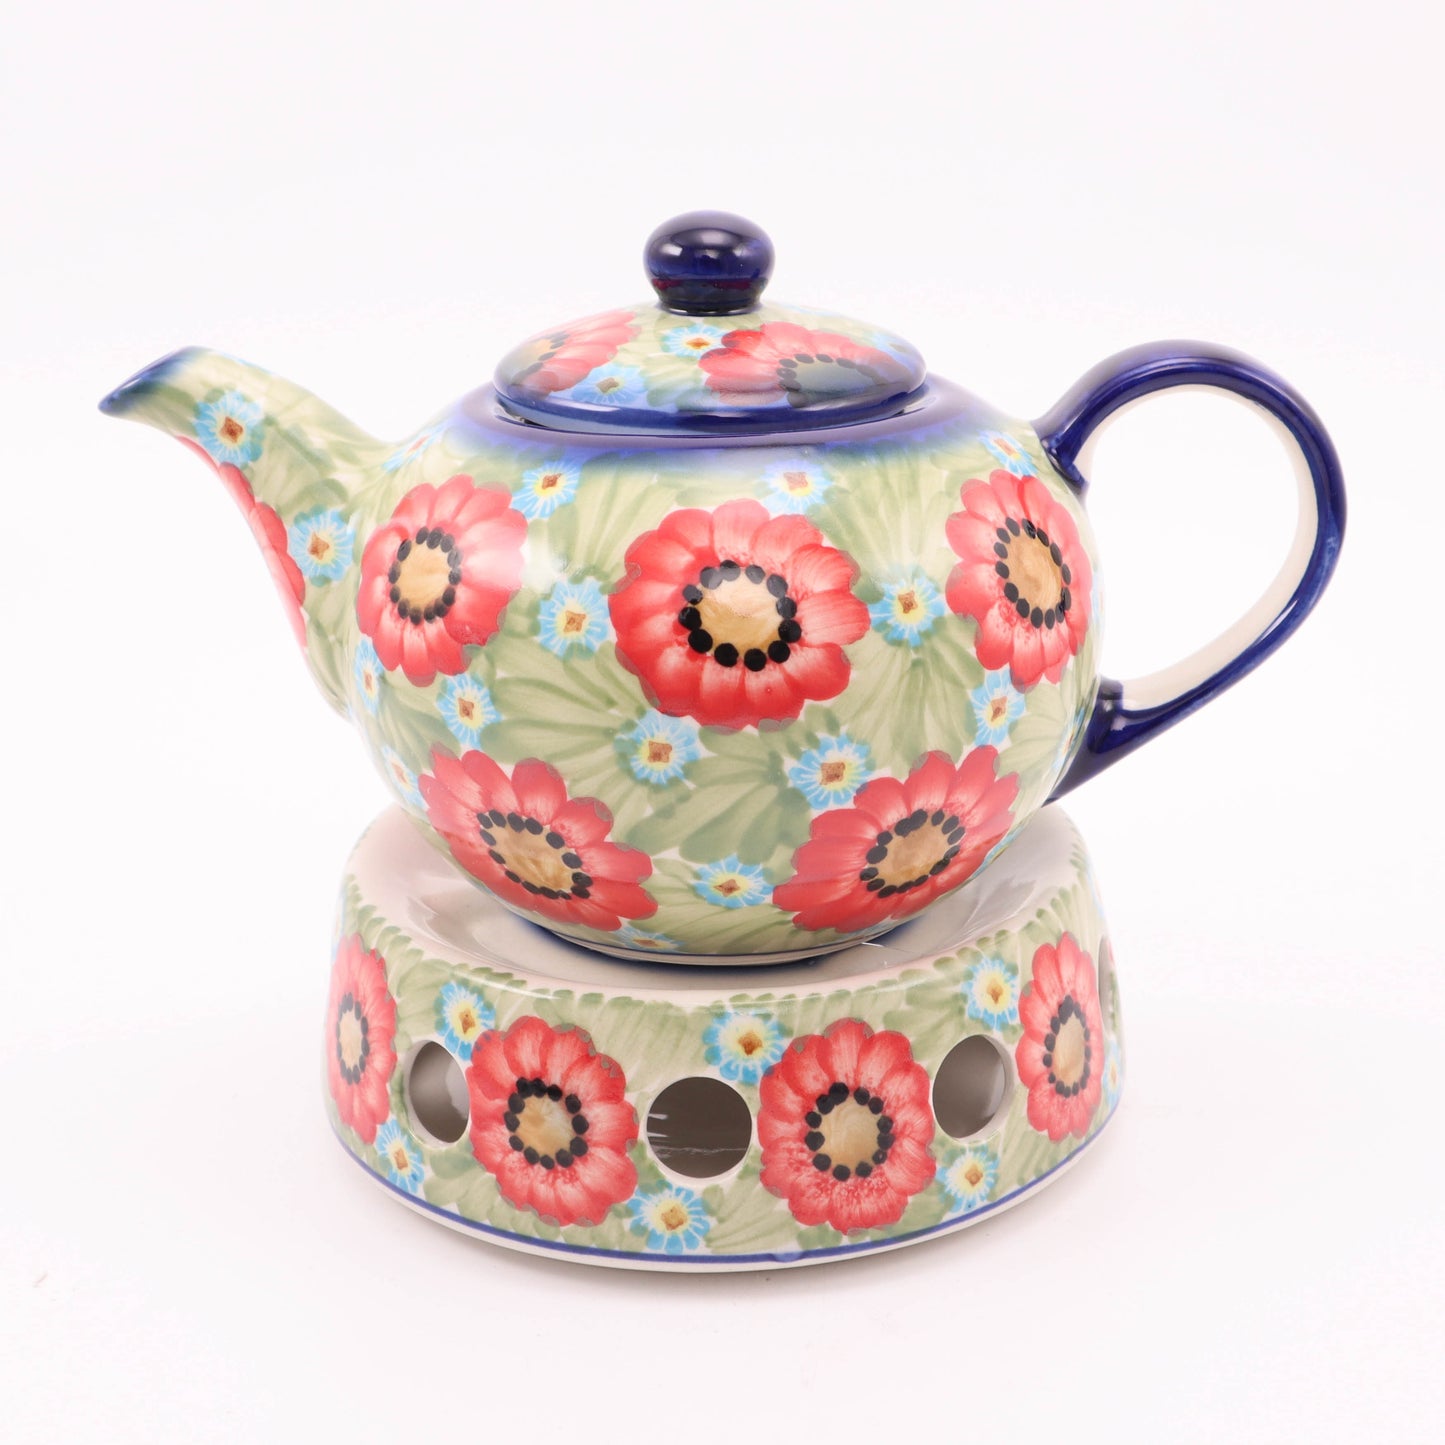 1L Jumbo Teapot. Pattern: Flower Power